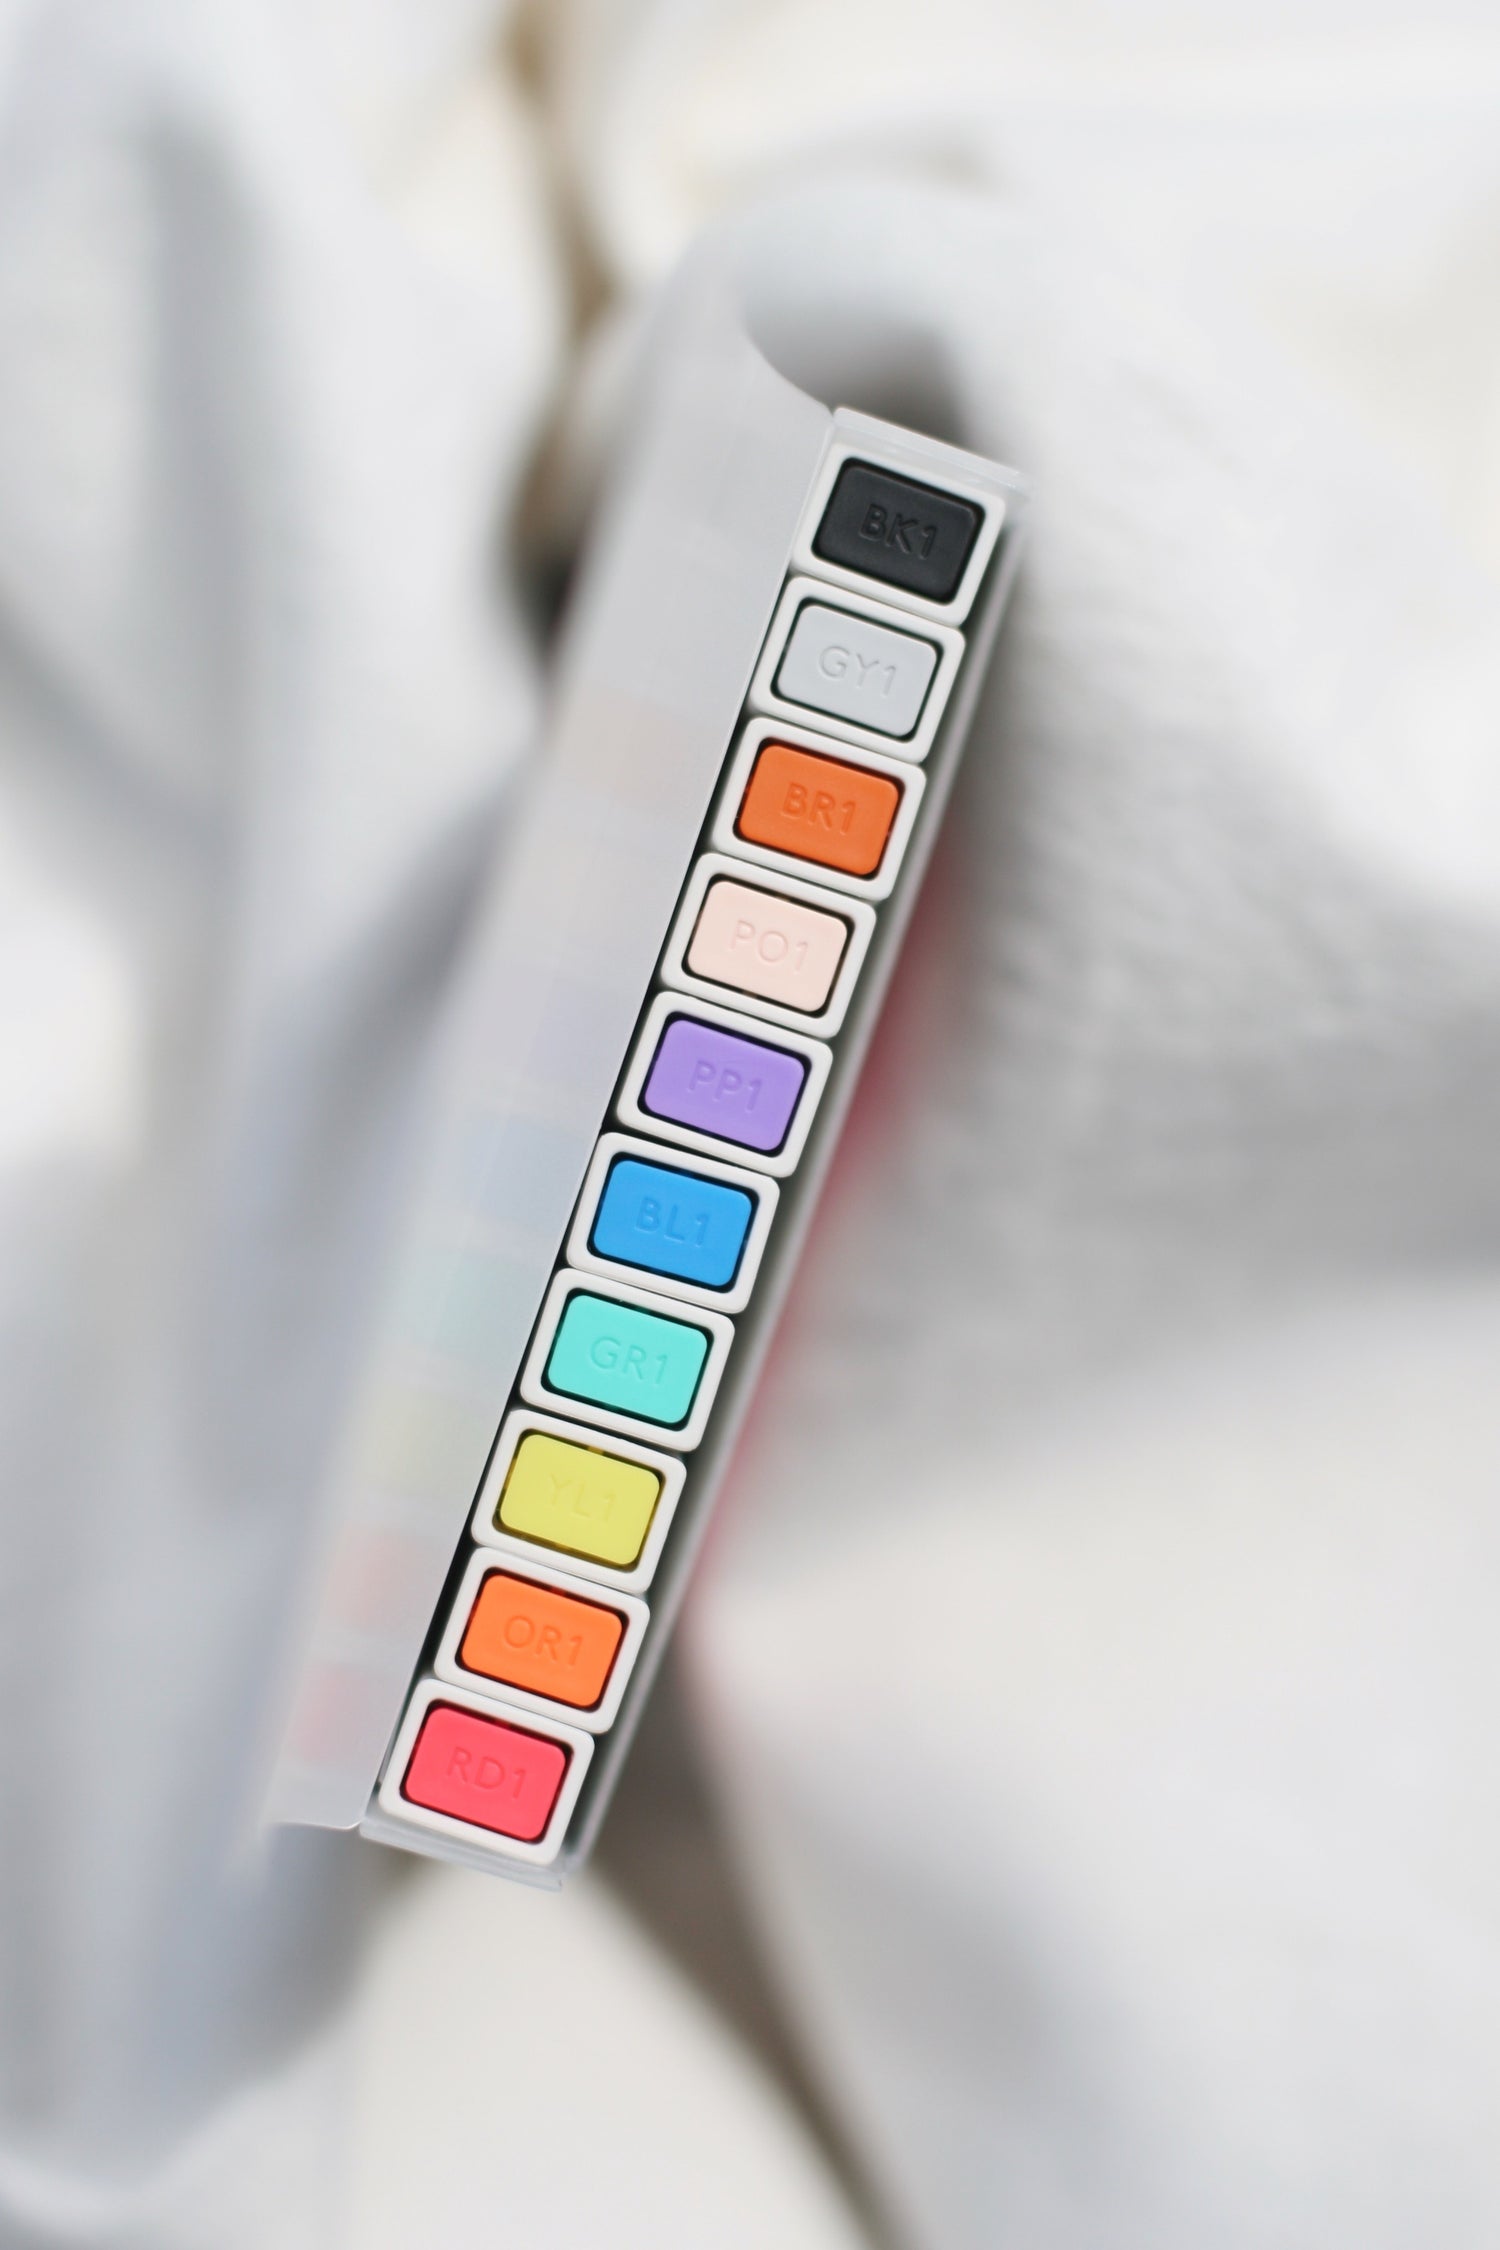 Kokuyo Pasta Gel Graphic Markers - 10 Color Set